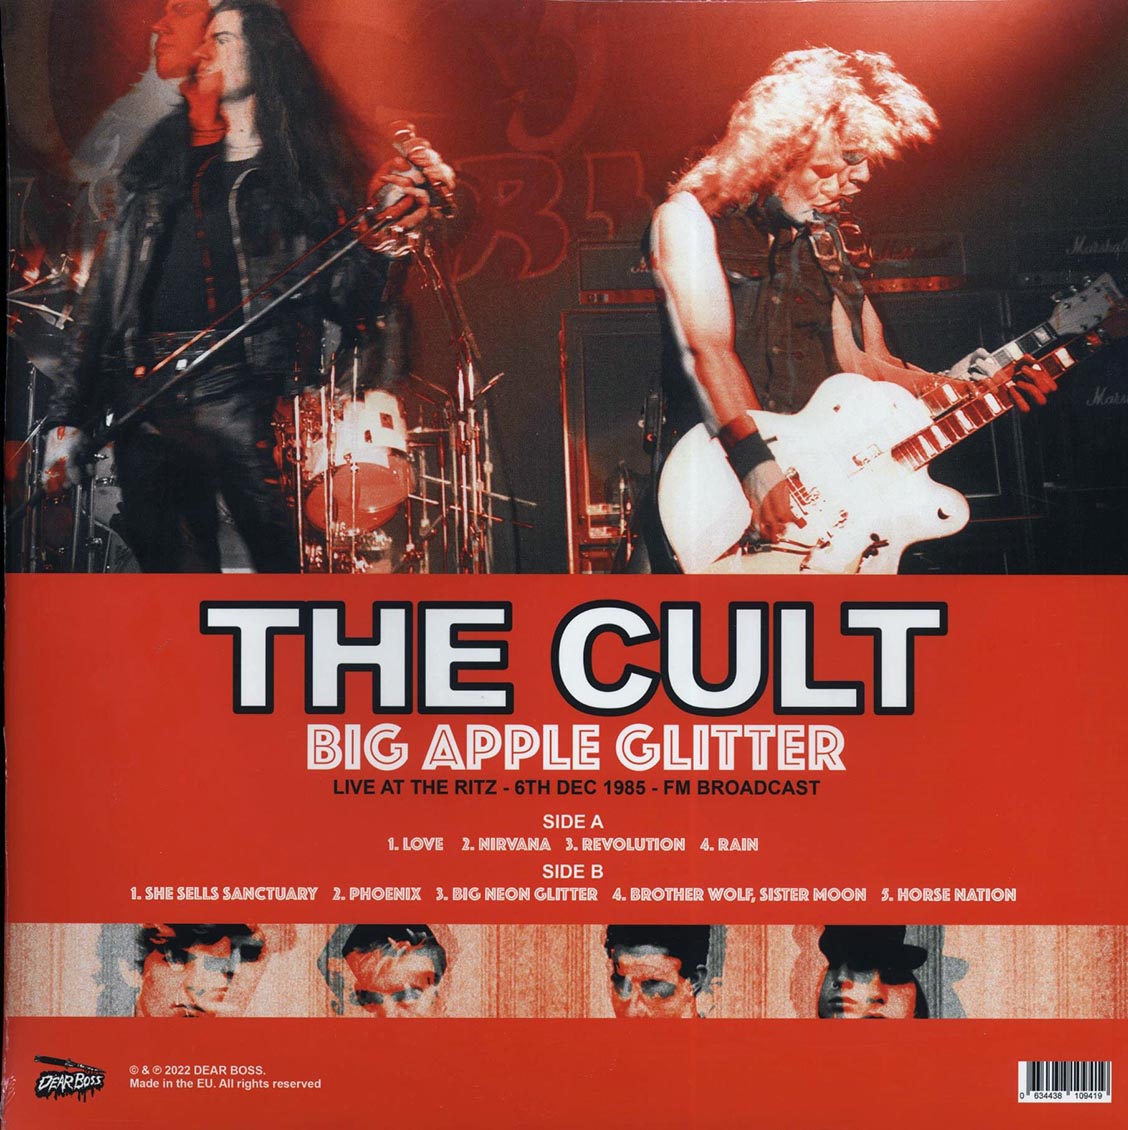 The Cult - Big Apple Glitter: Live At The Ritz, 6th December 1985 (ltd. 300 copies made) (colored vinyl) - Vinyl LP, LP